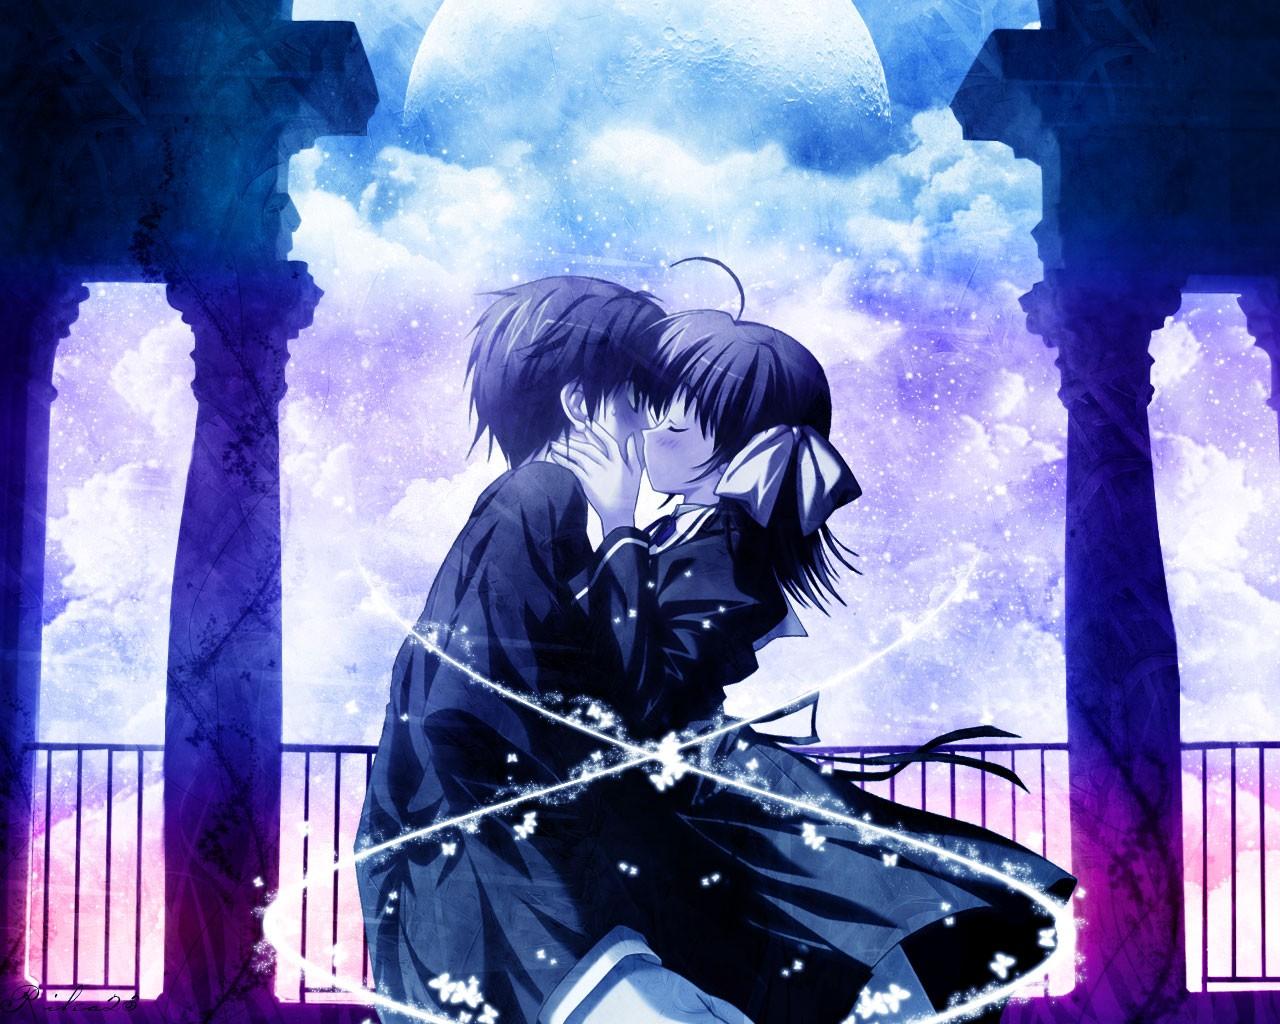 Kiss Wala Photo - anime Wallpaper Download